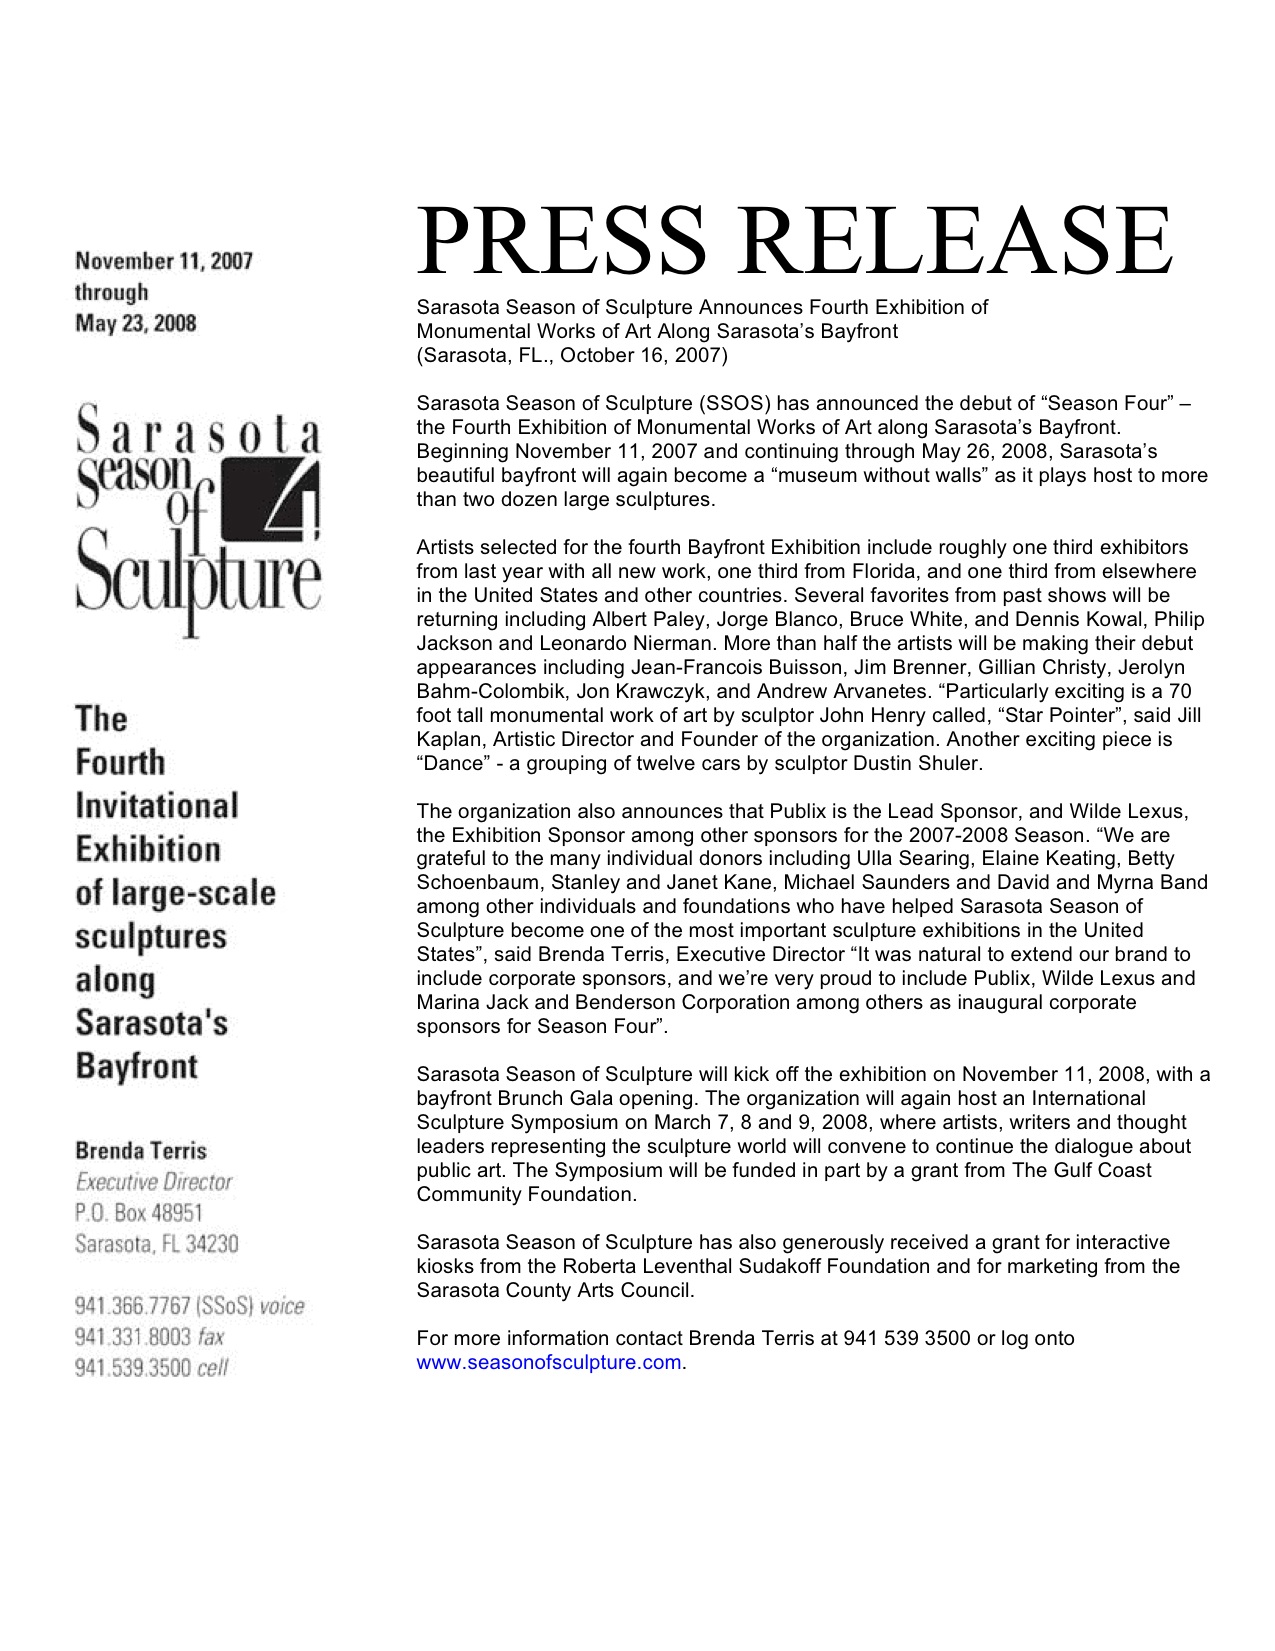 Sarasota Press Release 1.jpg